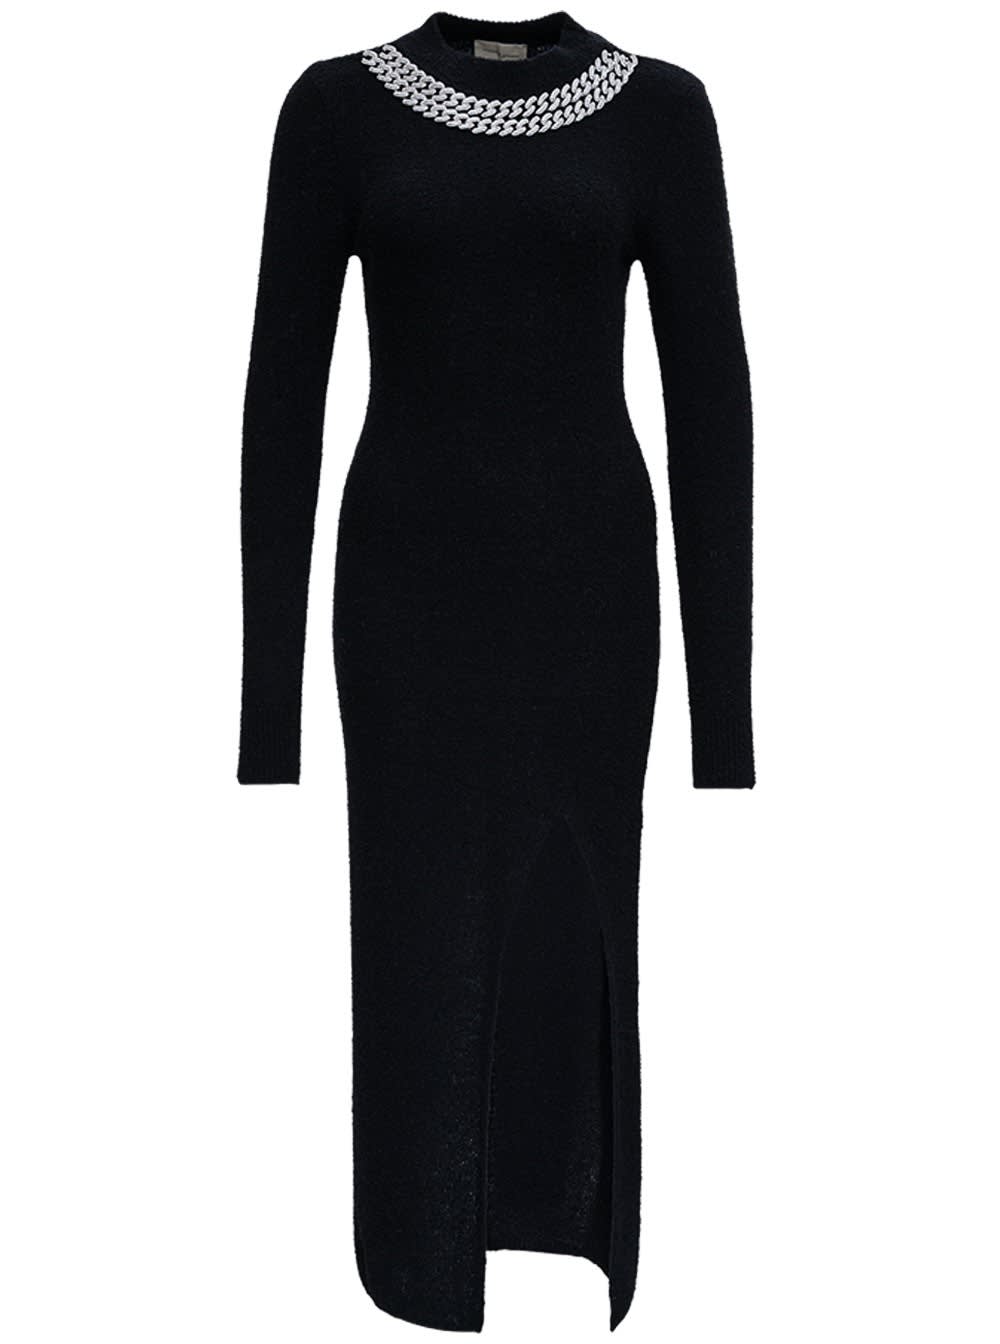 Giuseppe di Morabito Long Black Wool Blend Dress With Chain Detail